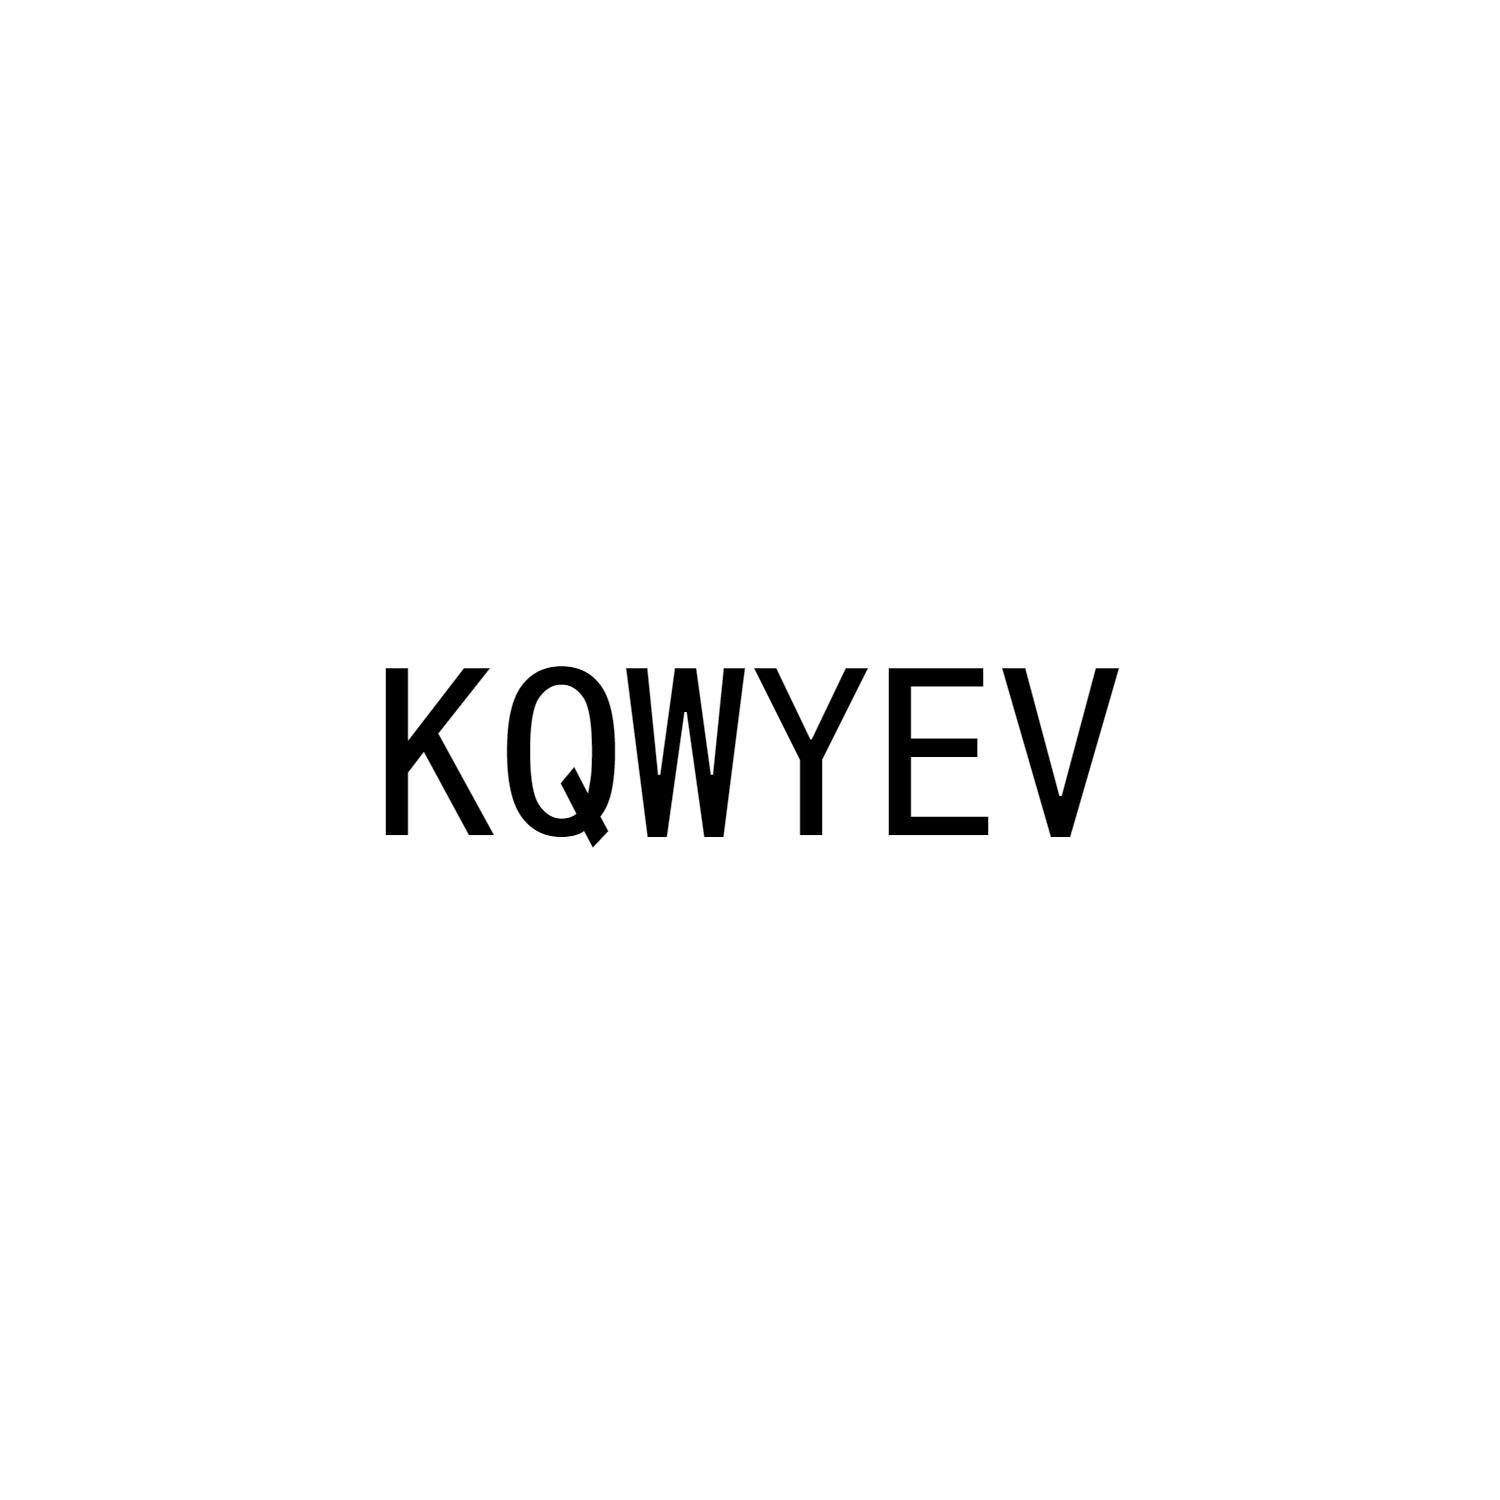 KQWYEV